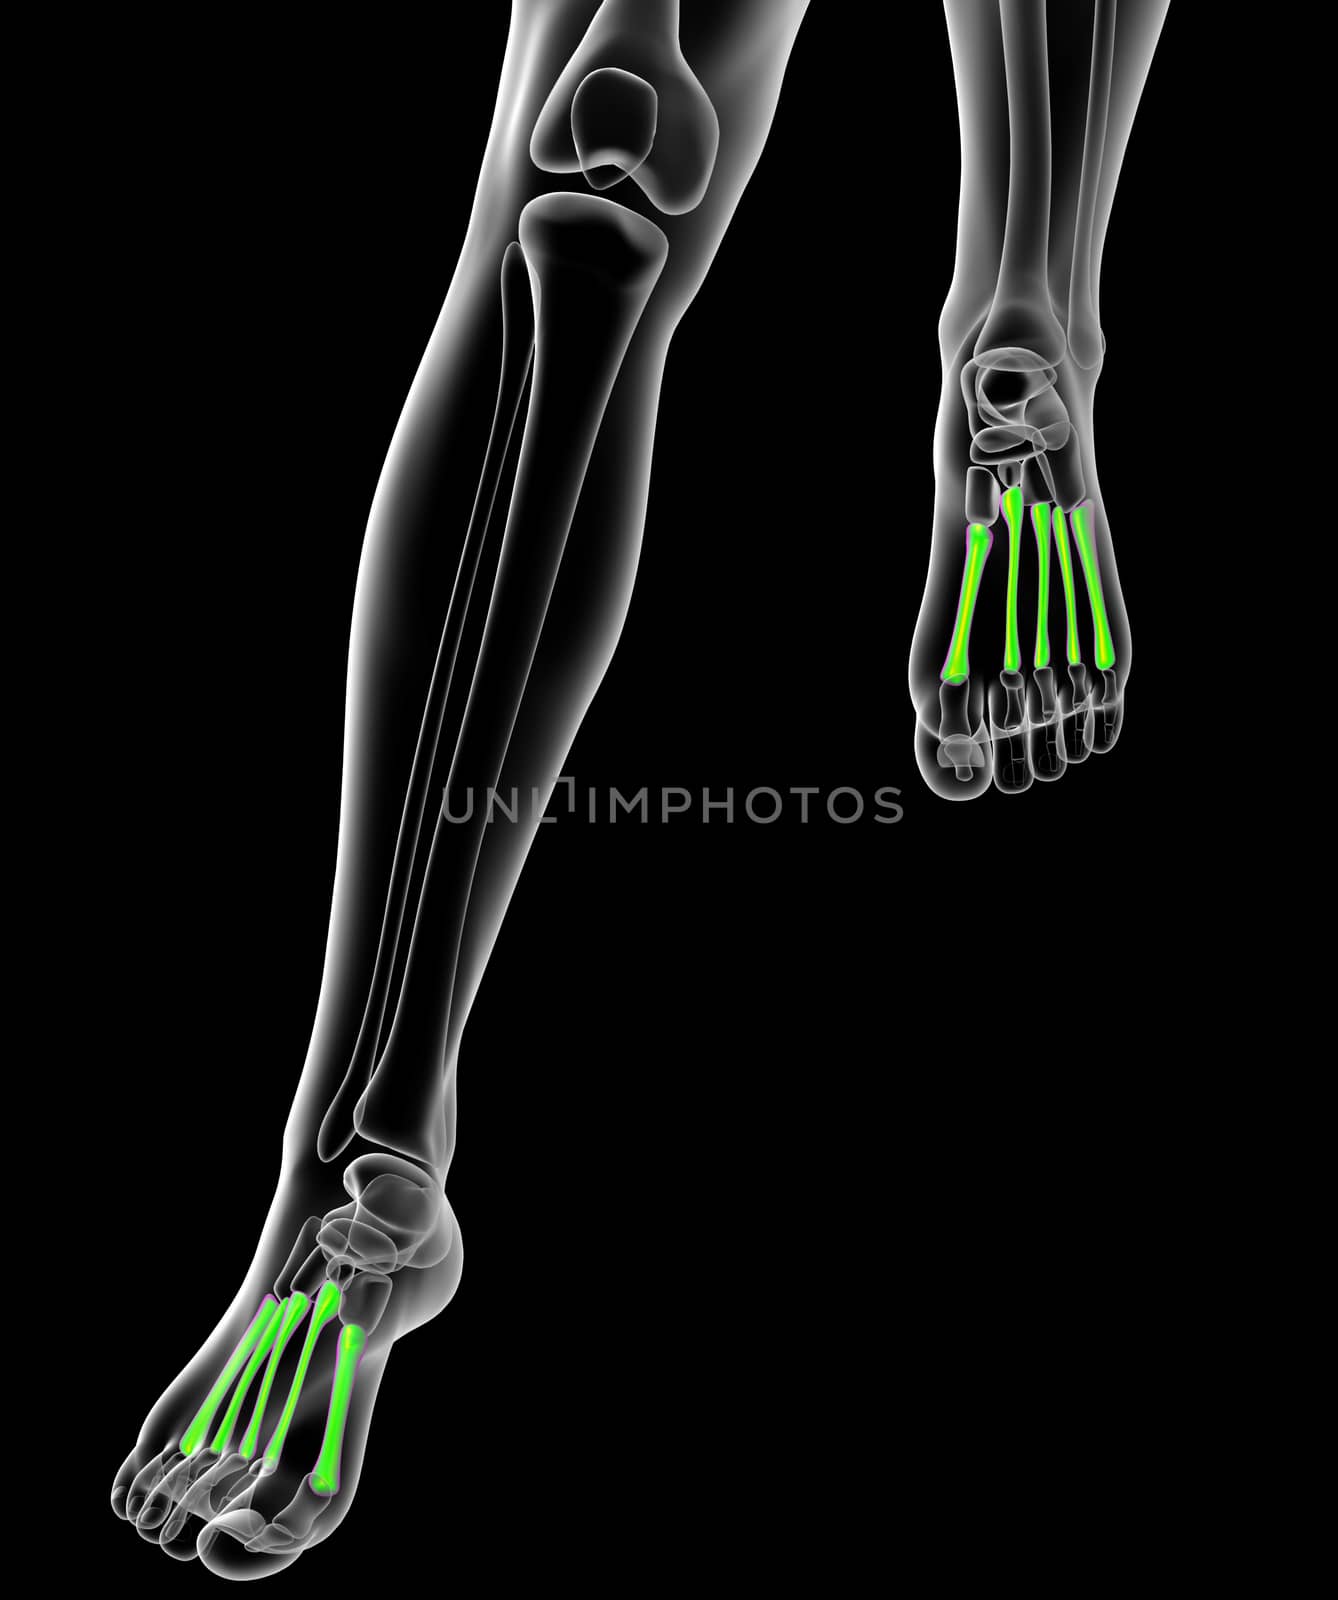 3d render medical illustration of the metatarsal bones - front view